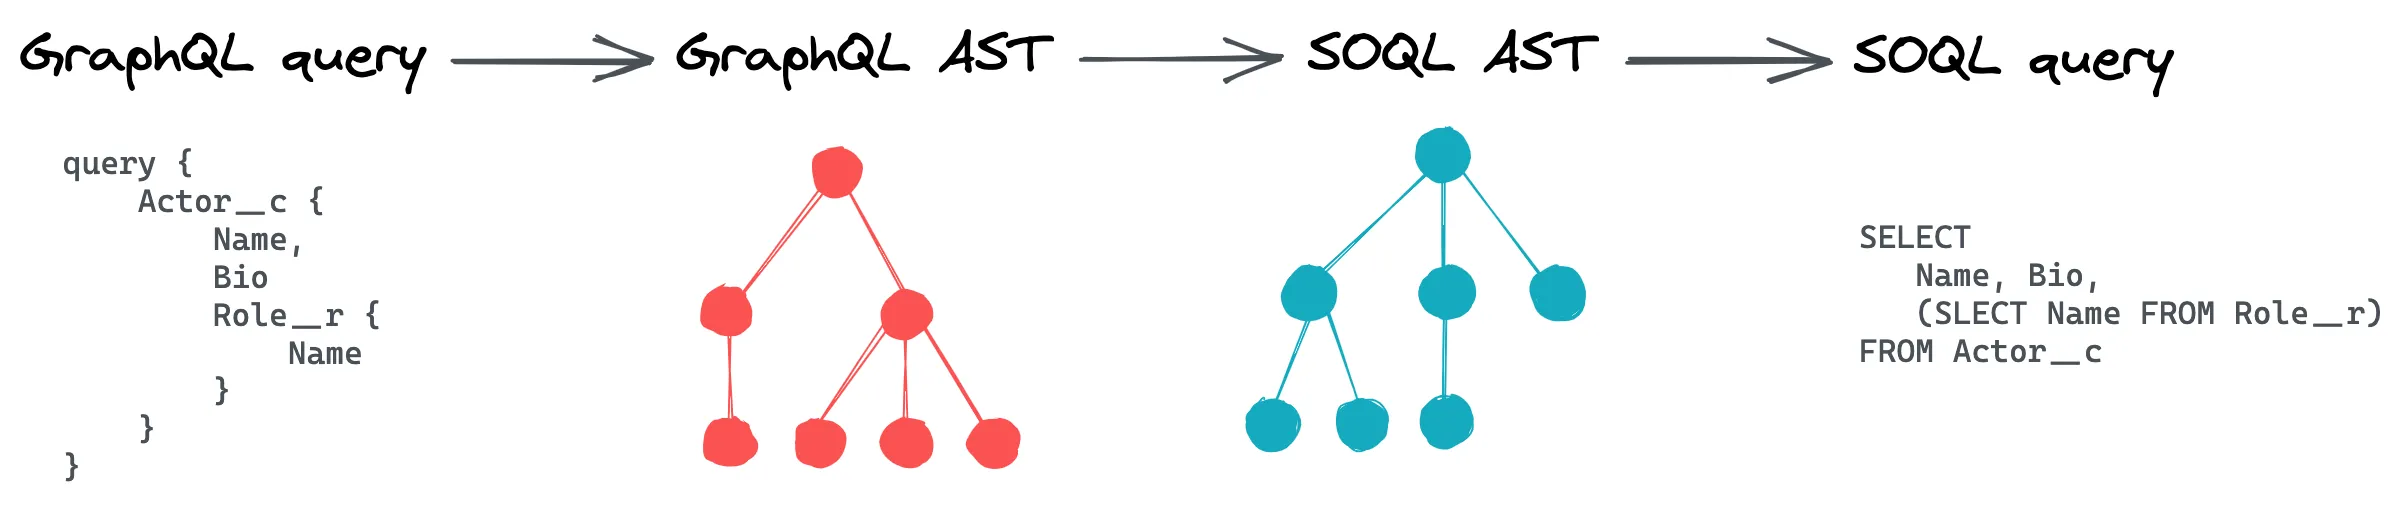 Query compilation: GraphQL query -> GraphQL AST -> SOQL AST -> SOQL query